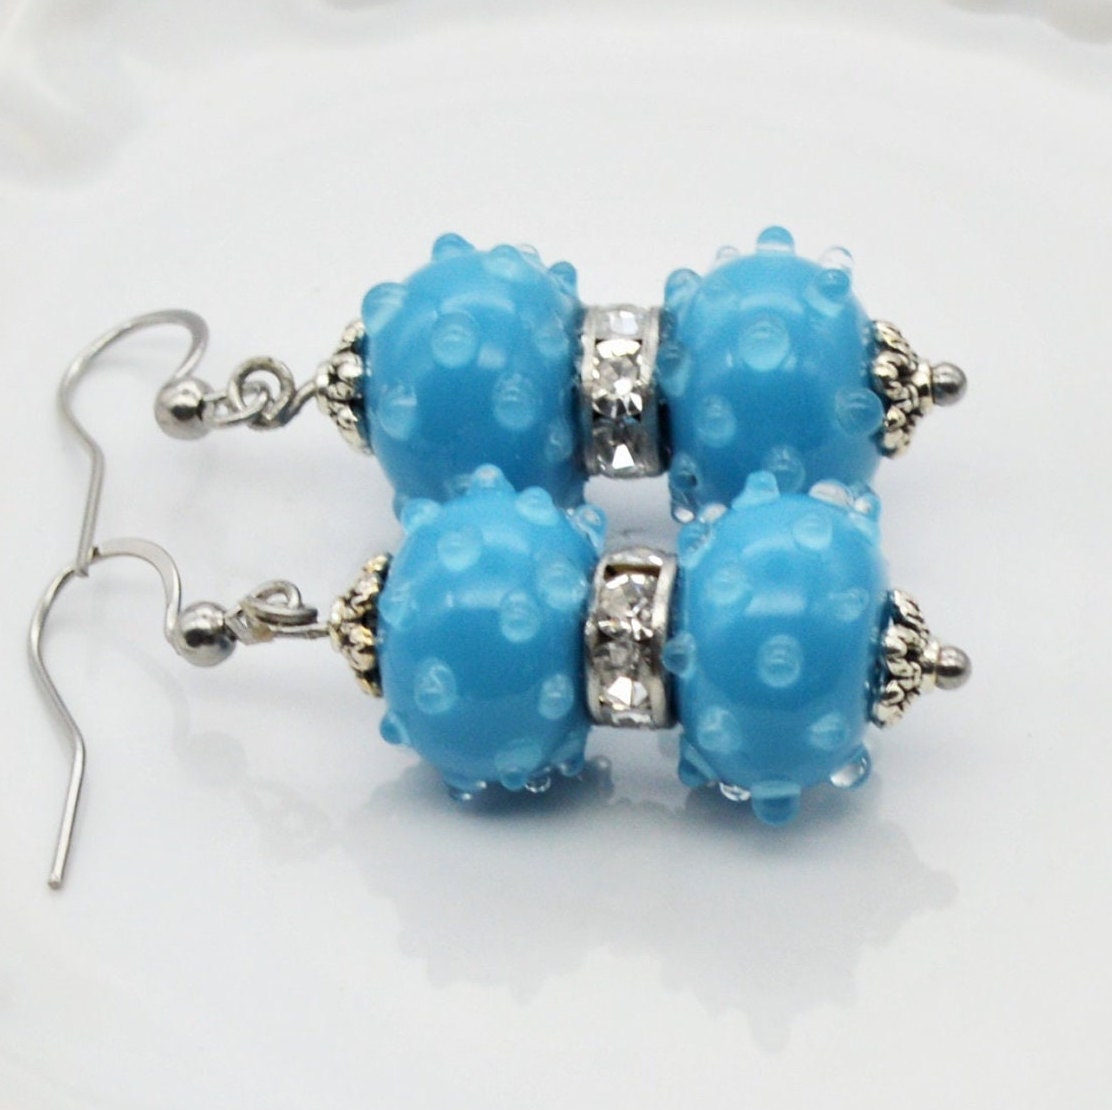 Handmade Bumpy Blue Genuine Venetian Murano Glass Lampwork Earrings, Glass Beads Created in Venice, Italy